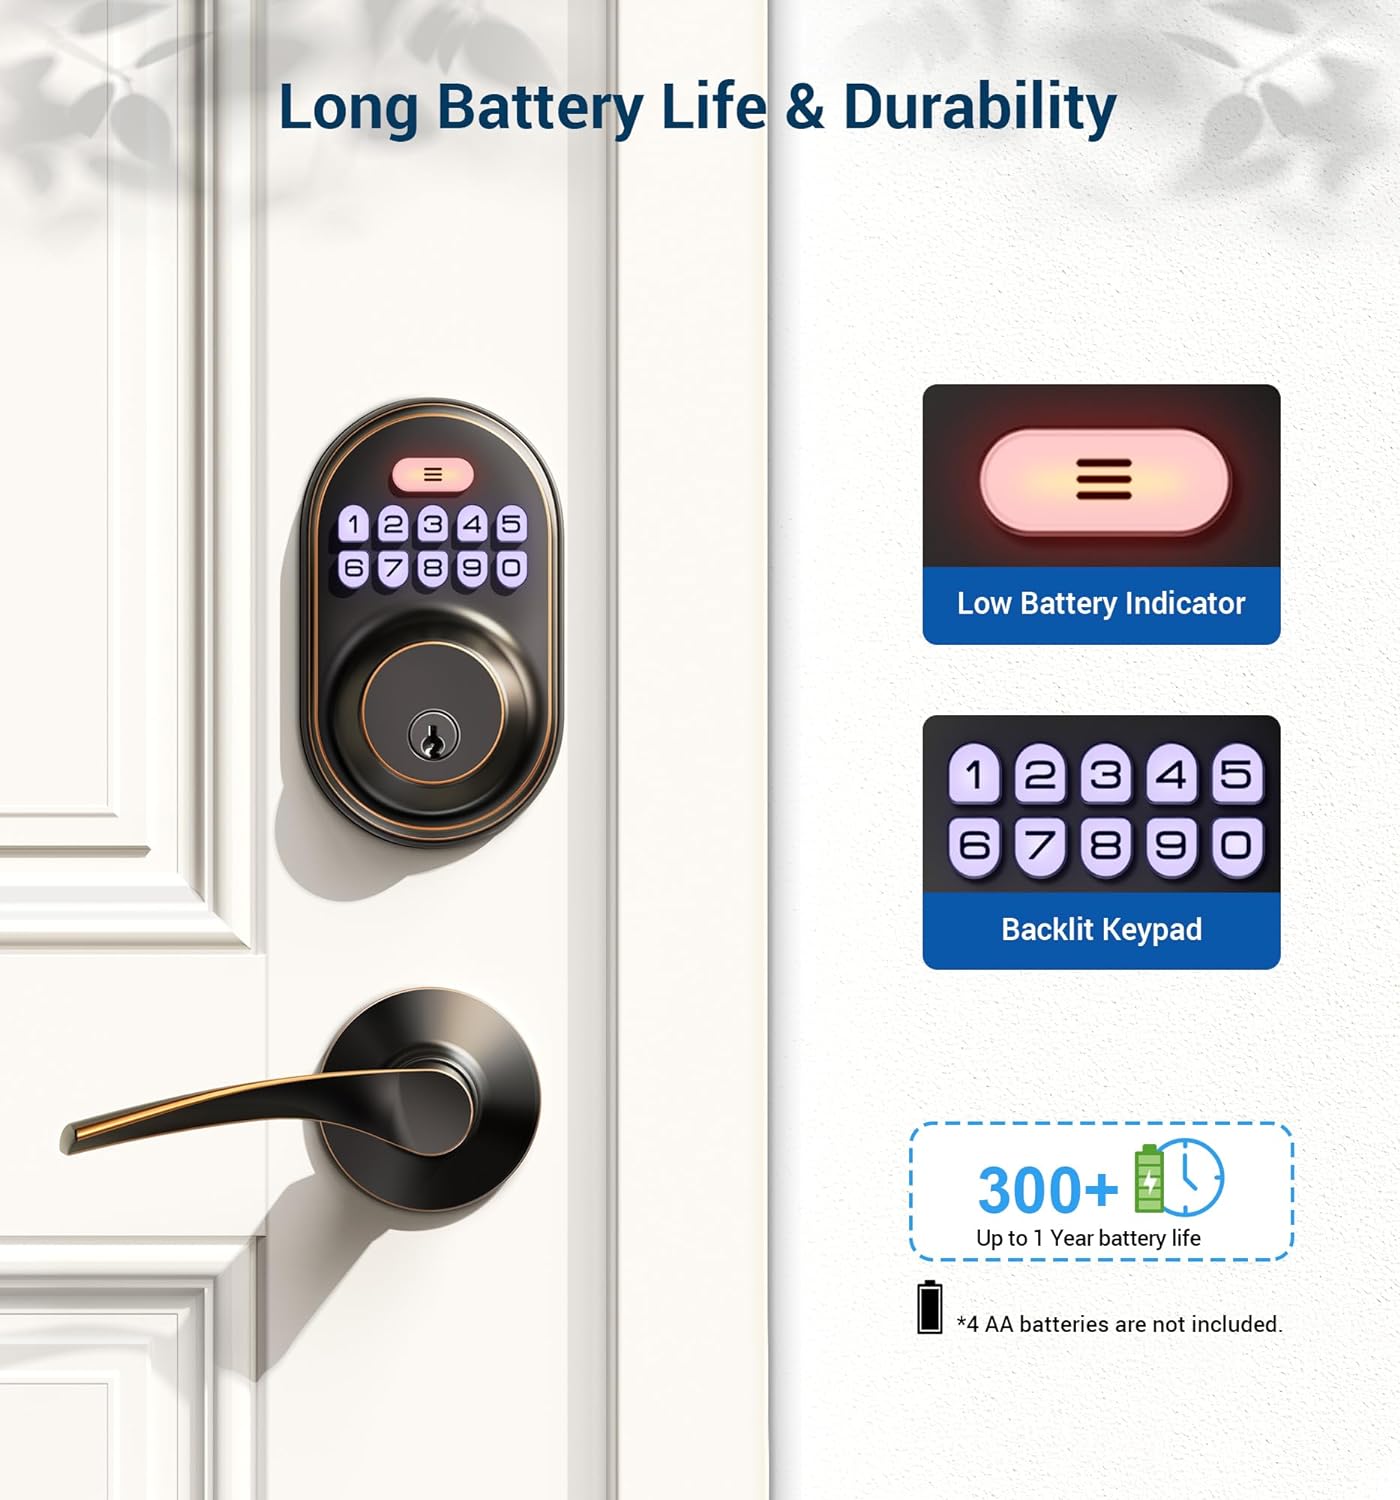 Veise RZ-C Keyless Entry Door Lock with 2 Lever Handles - Electronic Keypad Deadbolt, Auto Lock, Back Lit & Easy Installation Design, Front Door Handle Sets